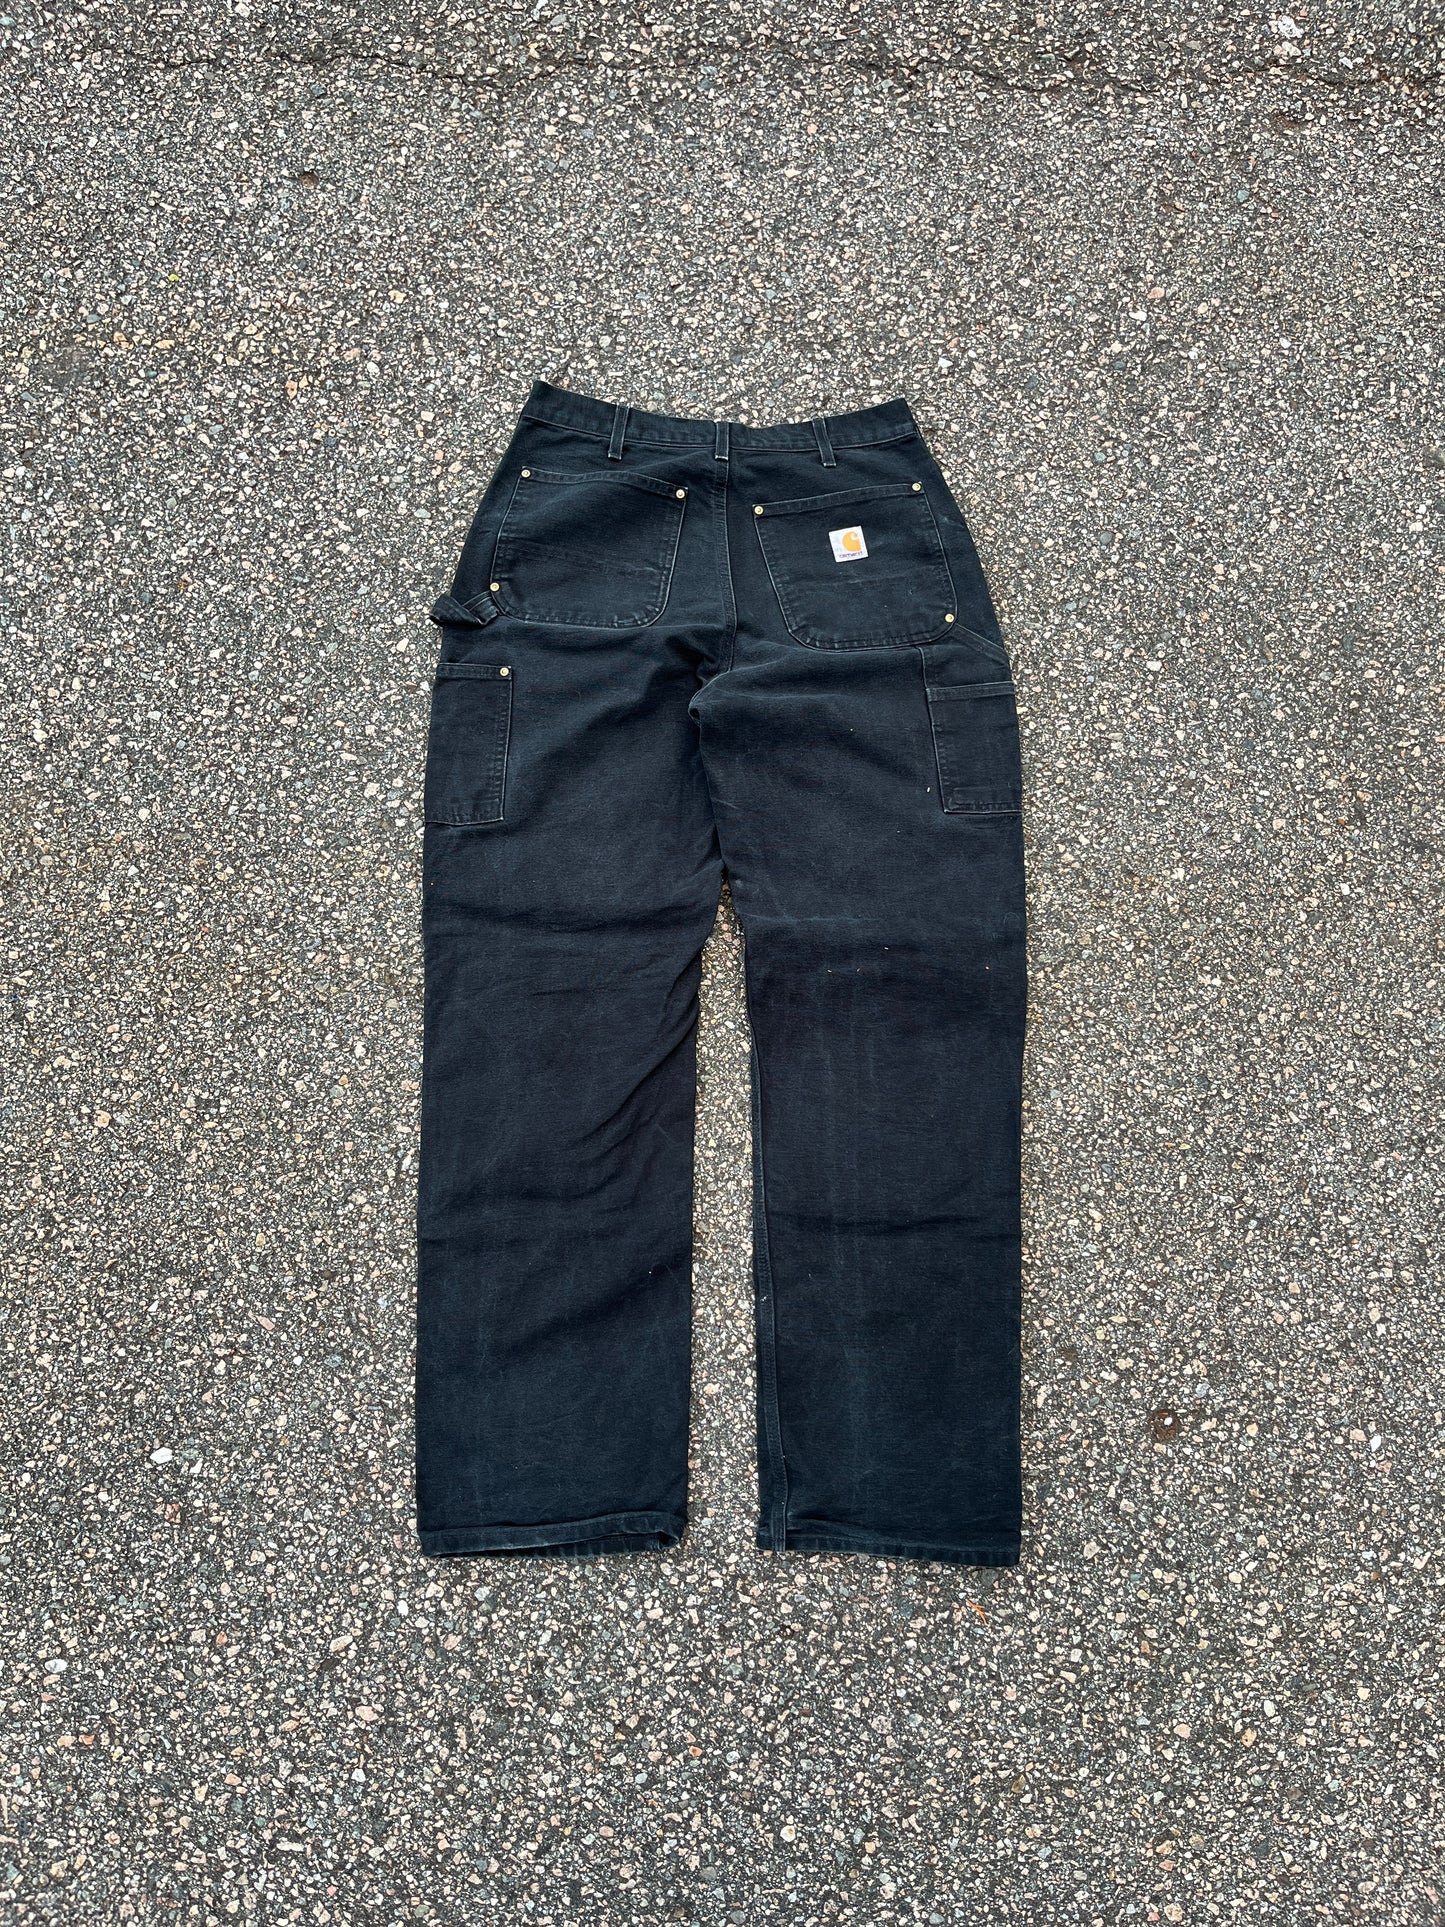 Faded Black Carhartt Double Knee Pants - 30 x 32